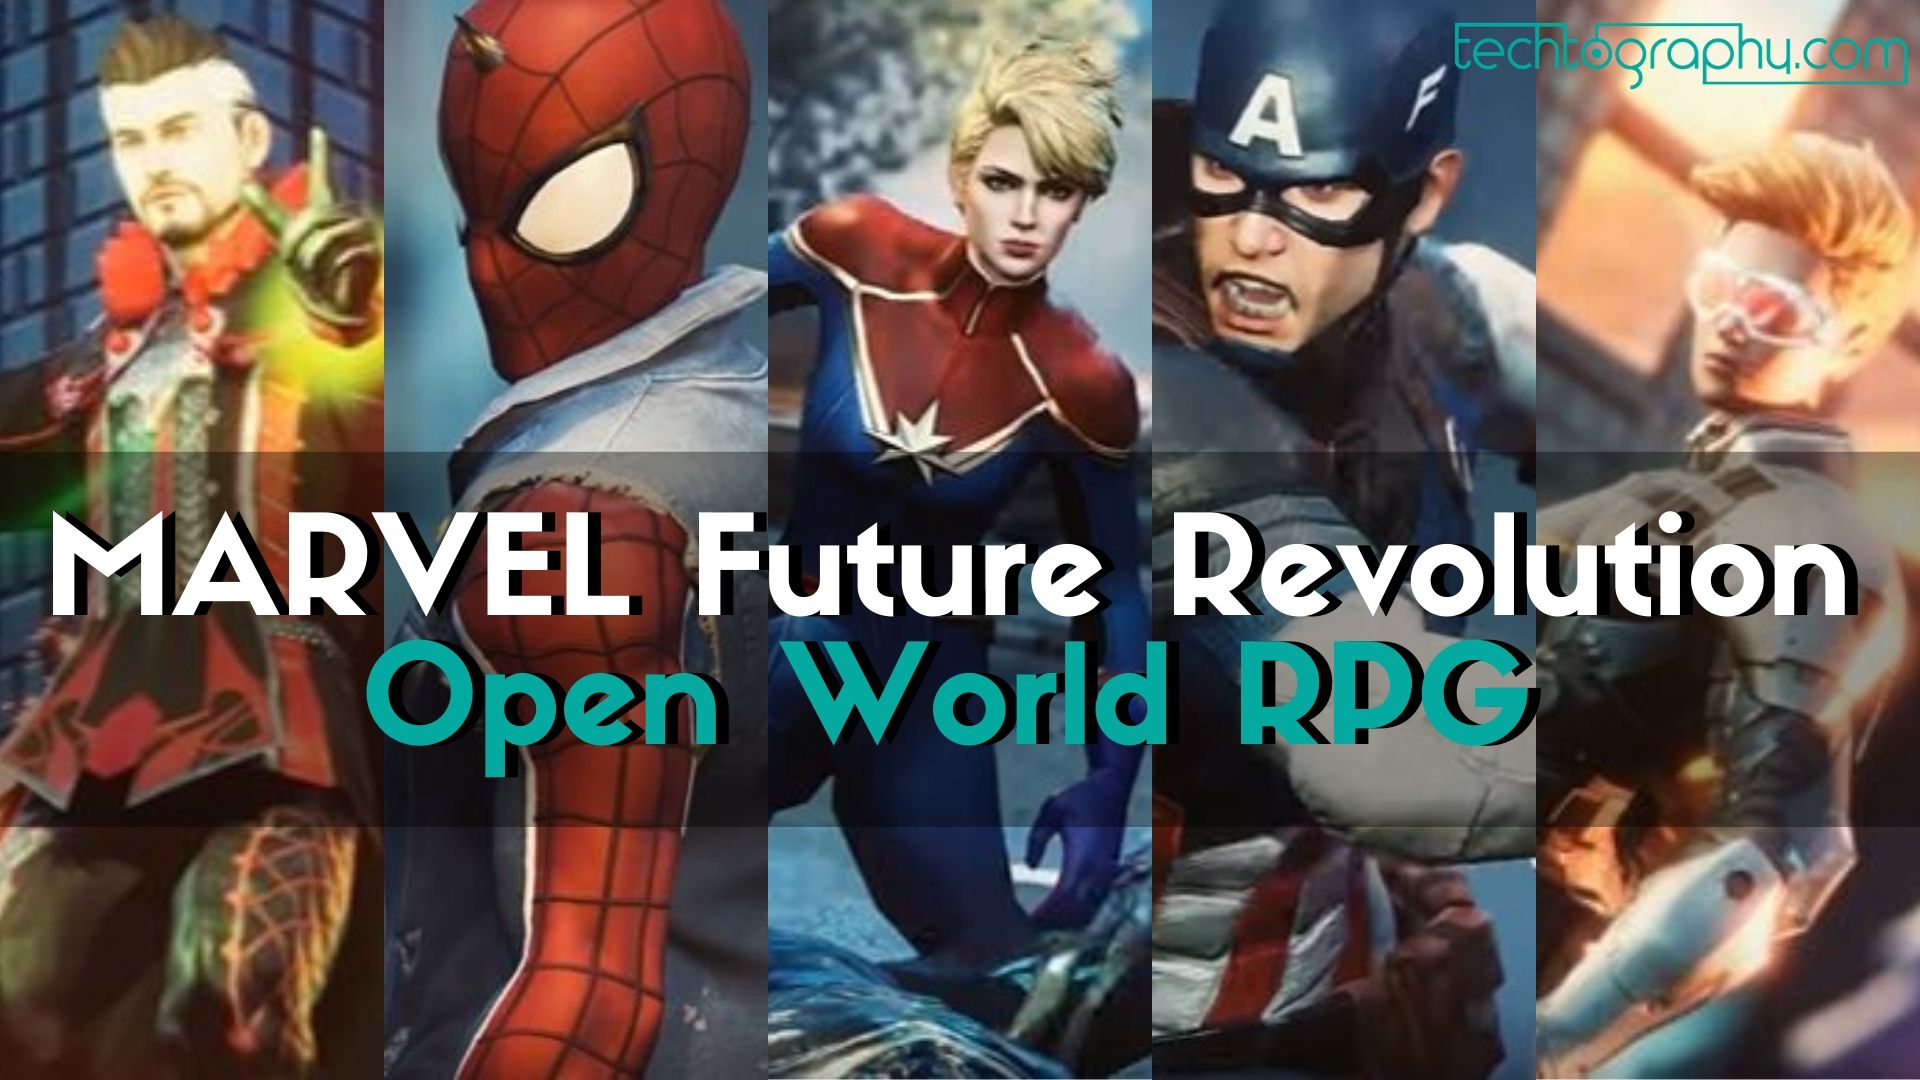 MARVEL Future Revolution Open World RPG